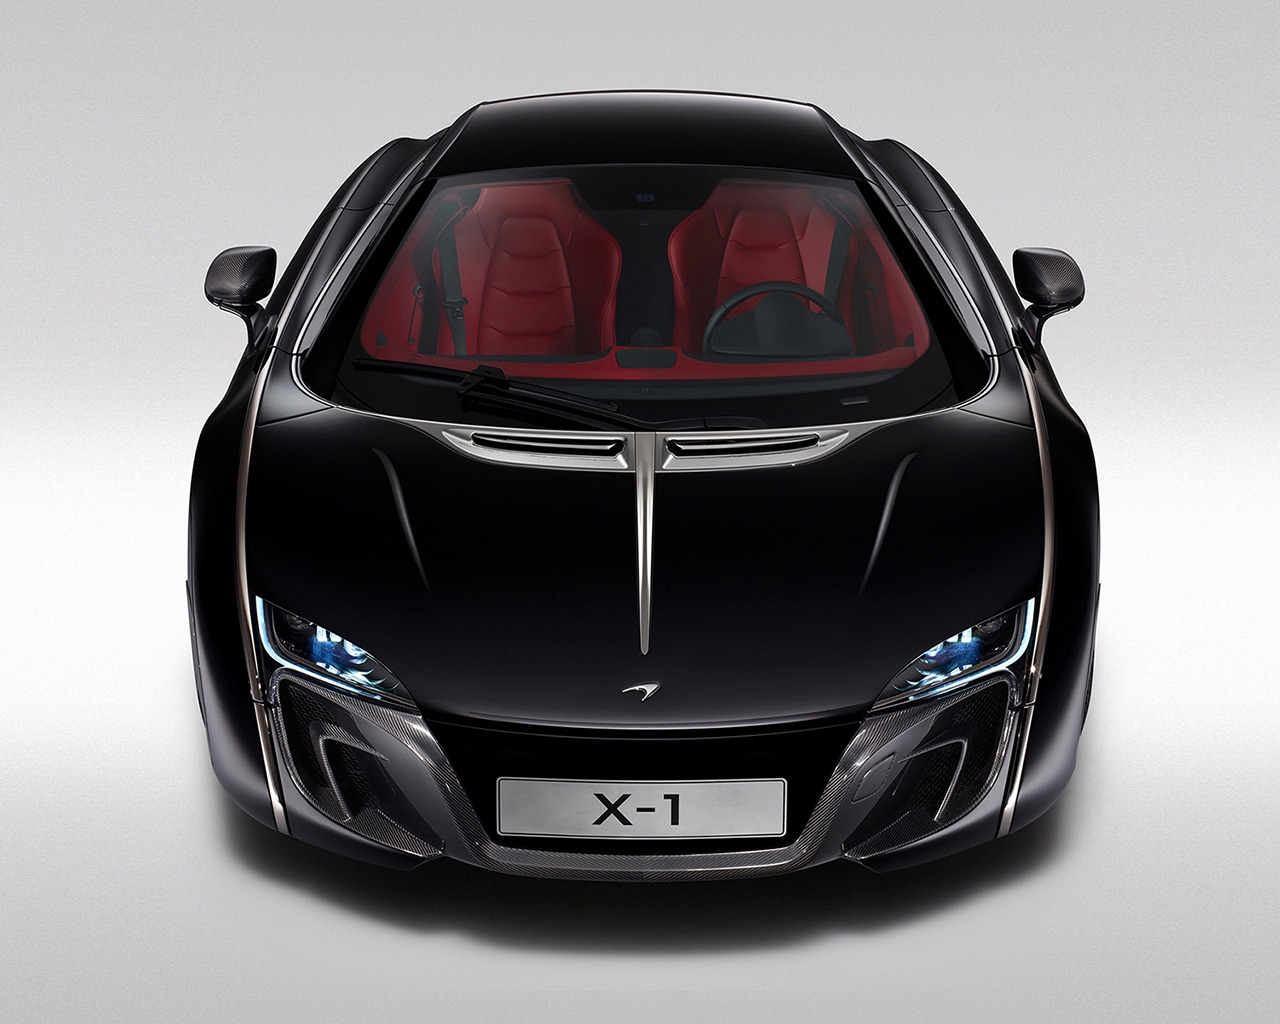 McLaren X1 Concept Front for 1280 x 1024 resolution